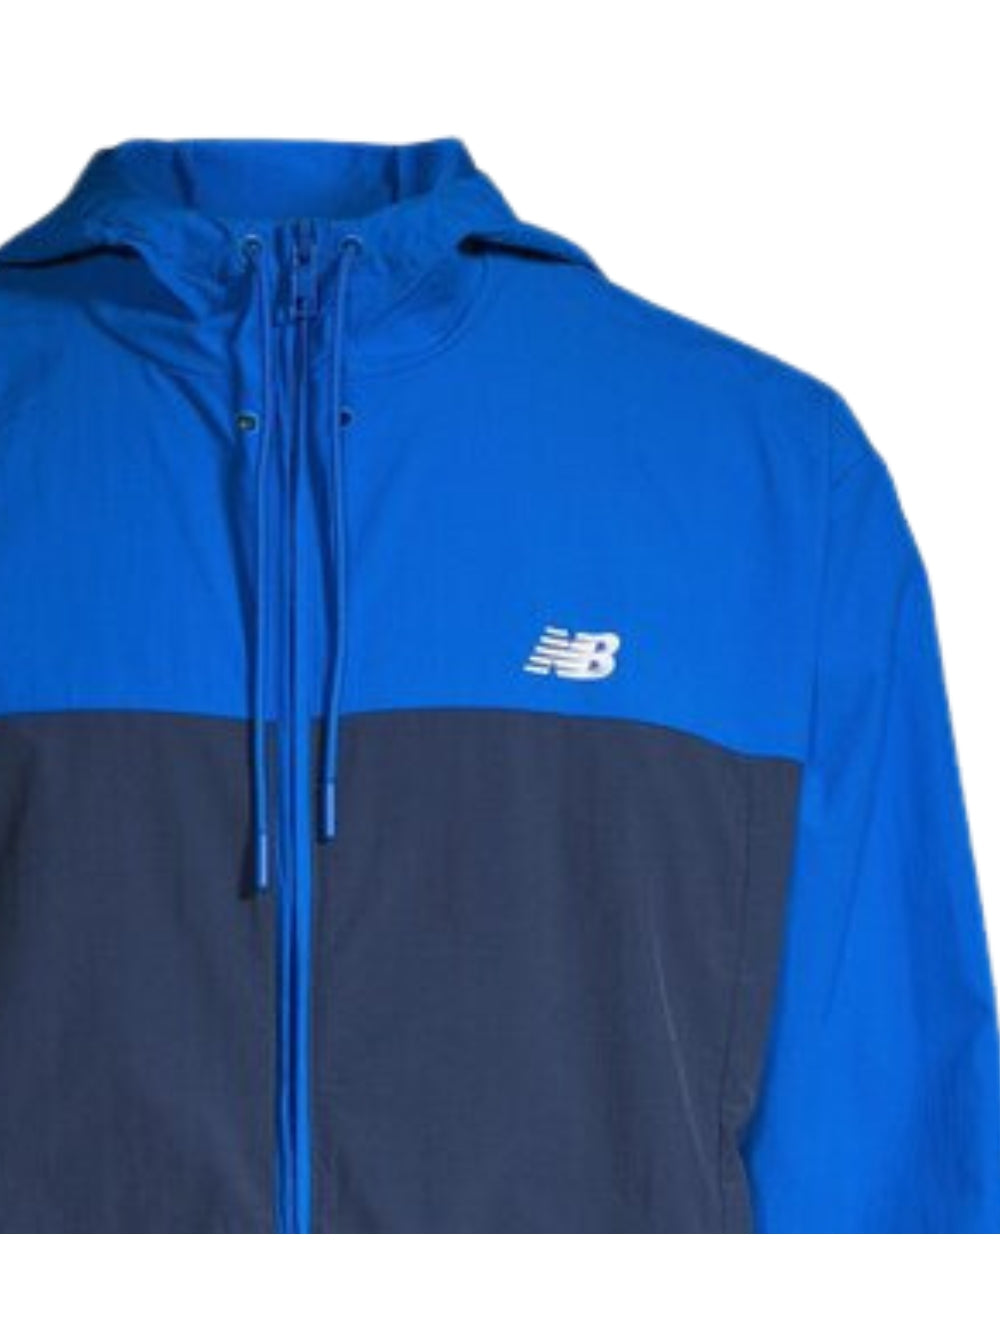 New Balance Athletics Woven Jacket